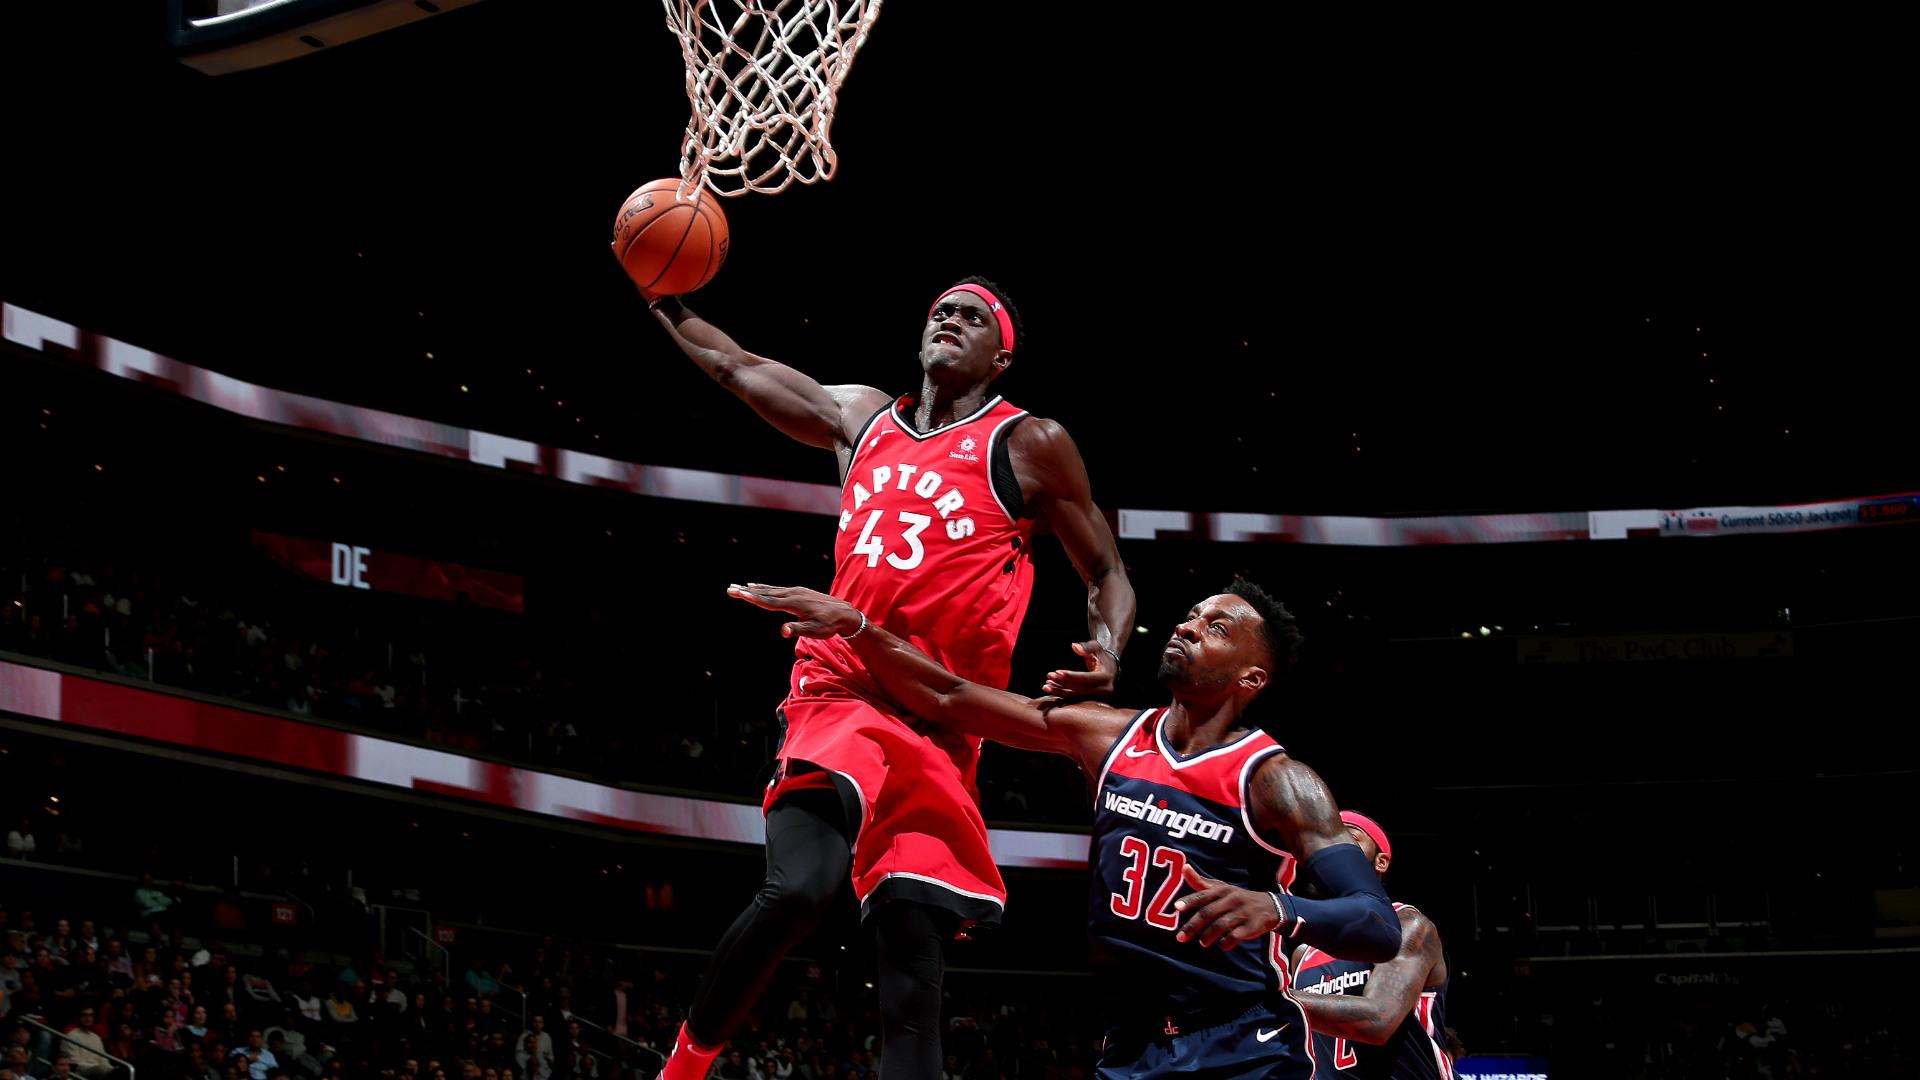 Toronto Raptors vs. Washington Wizards: Game preview, live stream